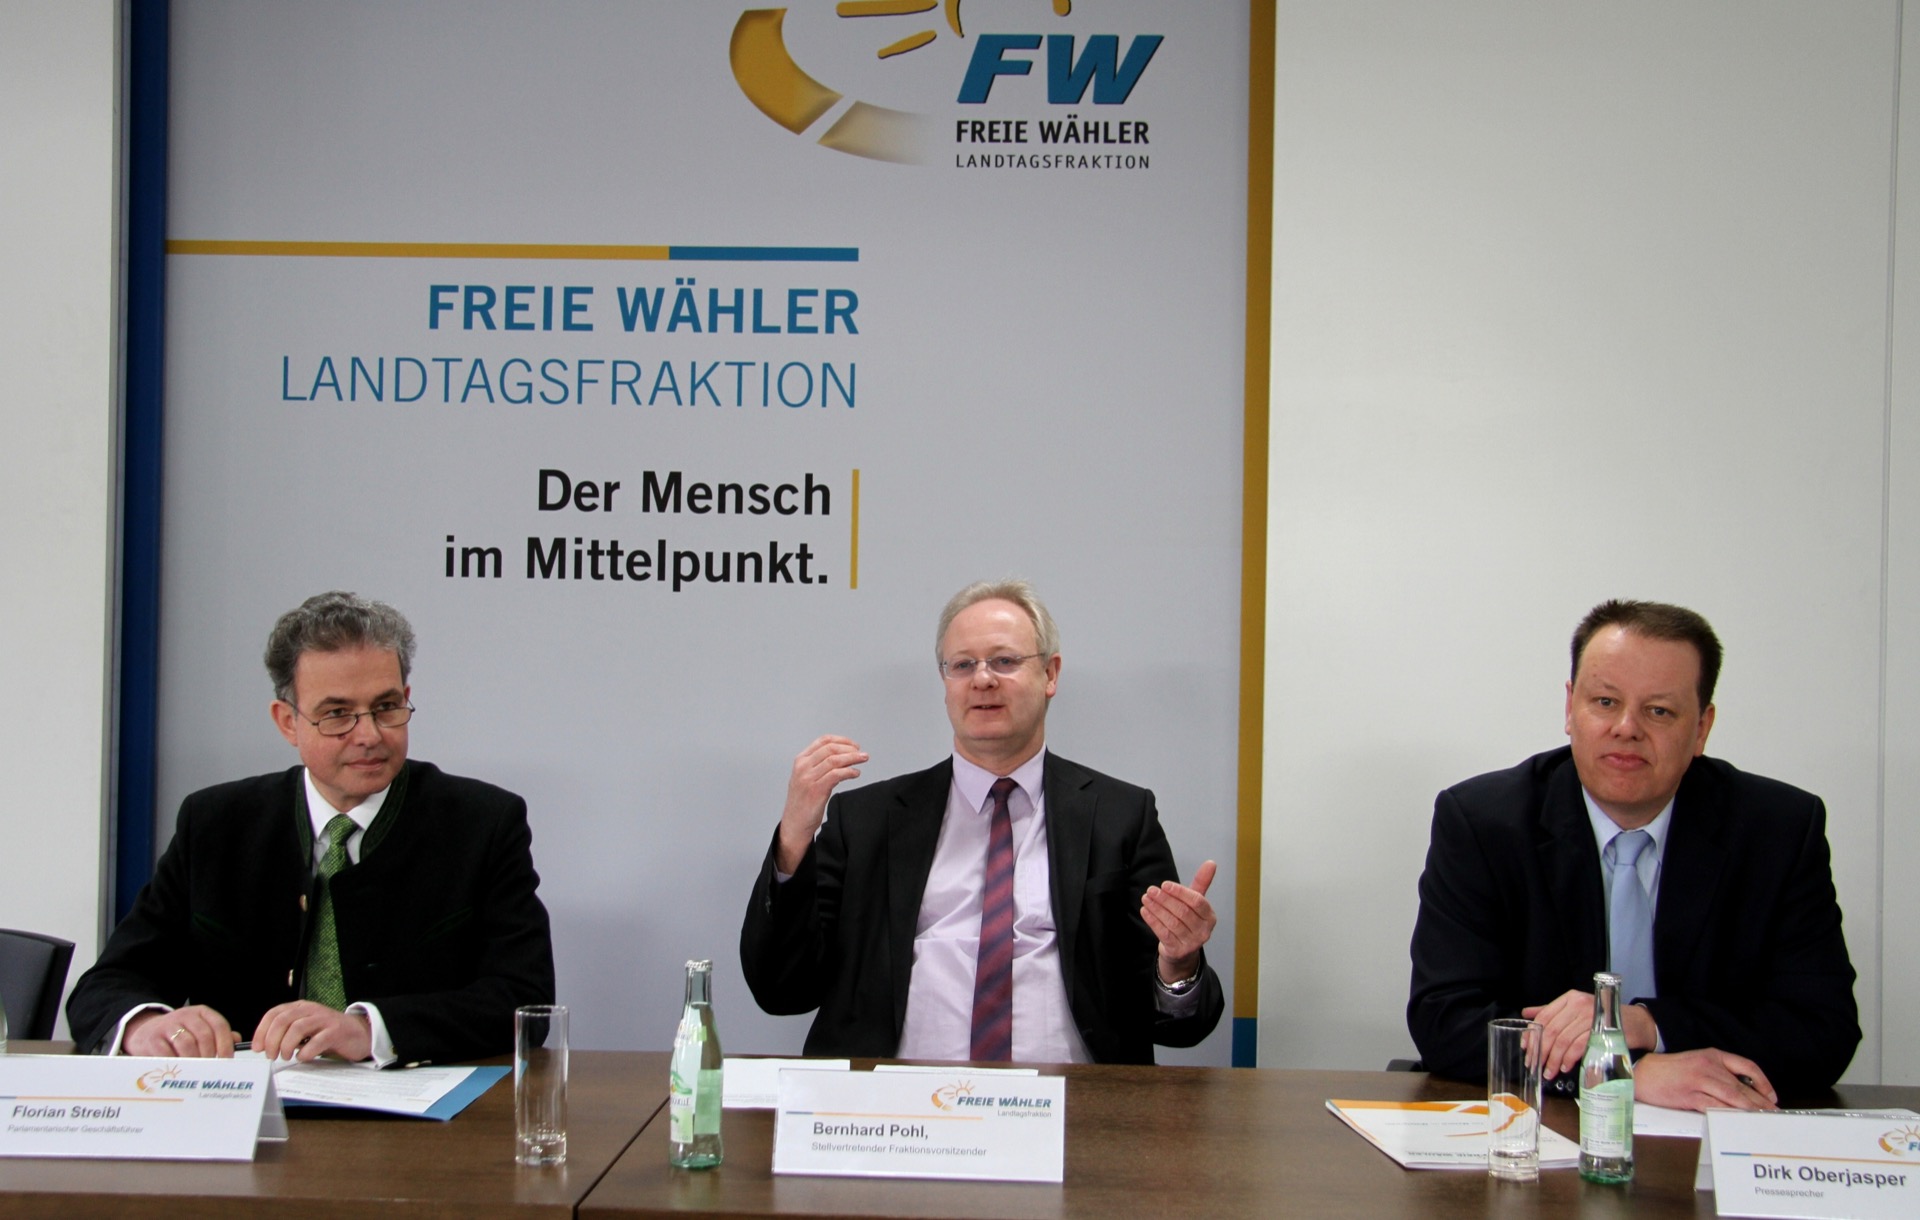 MdL Florian Streibl (Parlamentarischer Geschäftsführer), MdL Bernhard Pohl (stv. Fraktionsvorsitzender) und Pressesprecher Dirk Oberjasper